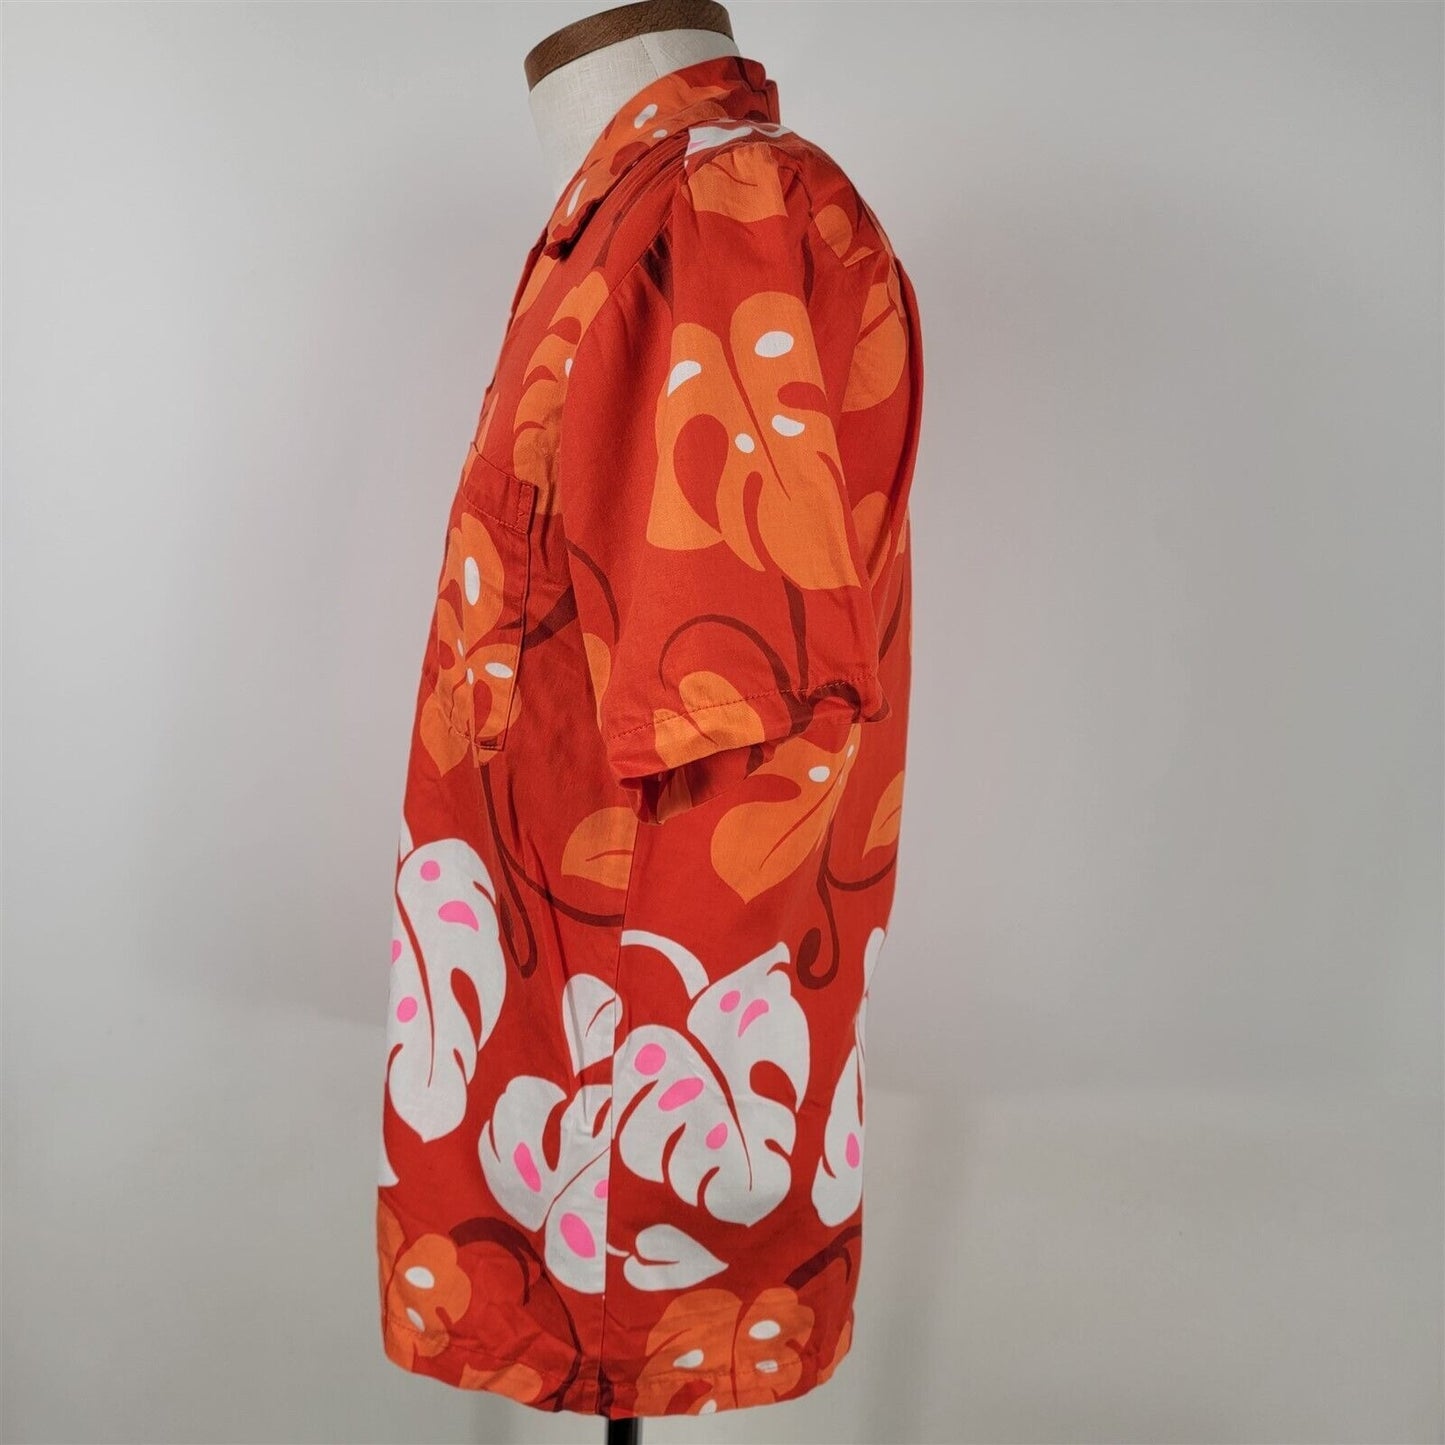 Vintage 1960s Hookano Orange Floral Hawaiian Tiki Cotton Button Up Shirt Mens M